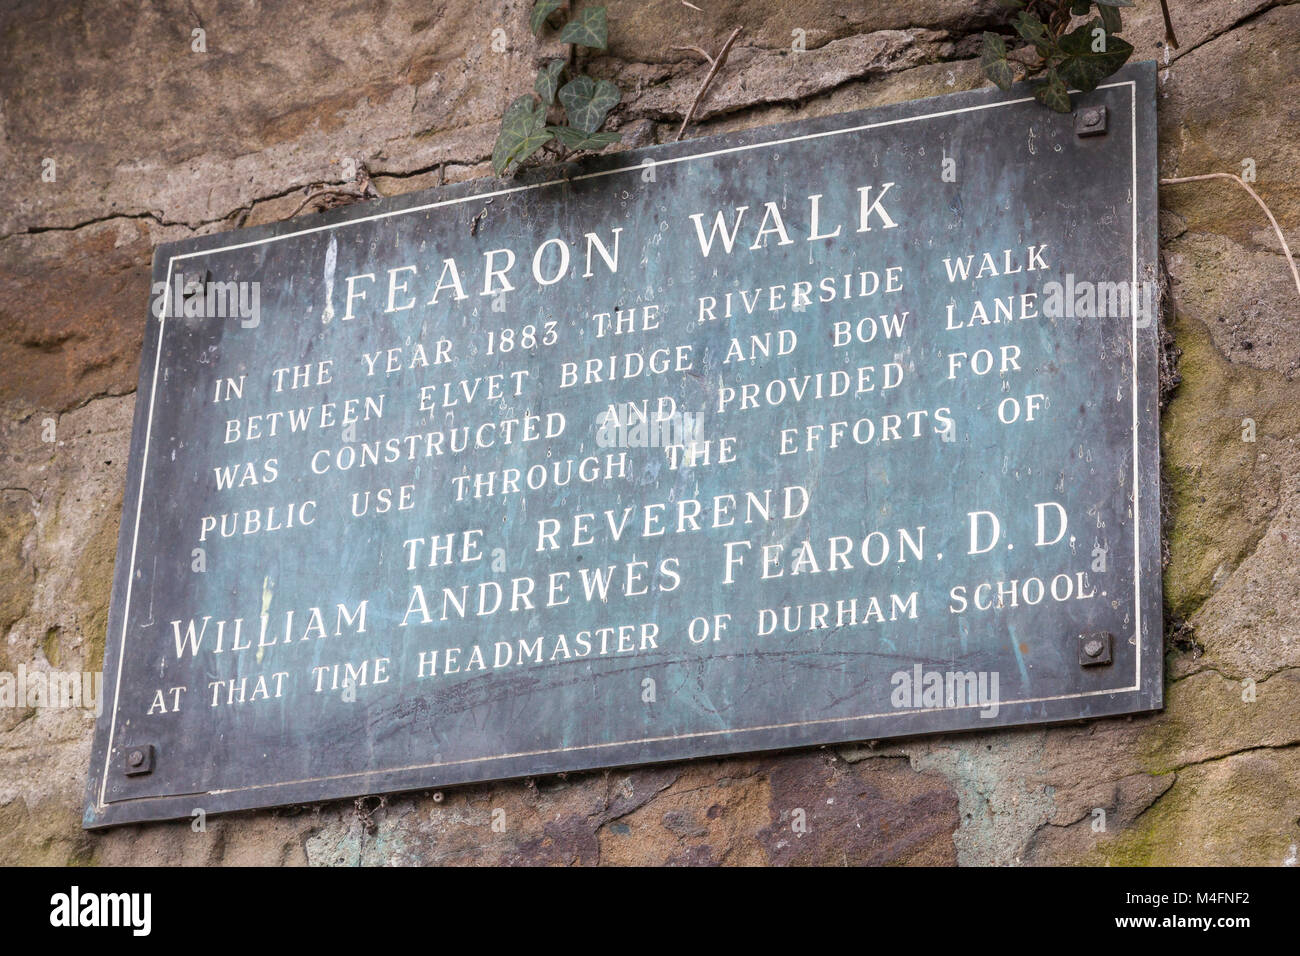 Plaque on a riverside wall in Durham describing the origins of Fearon Walk in 1883, County Durham, UK Stock Photo